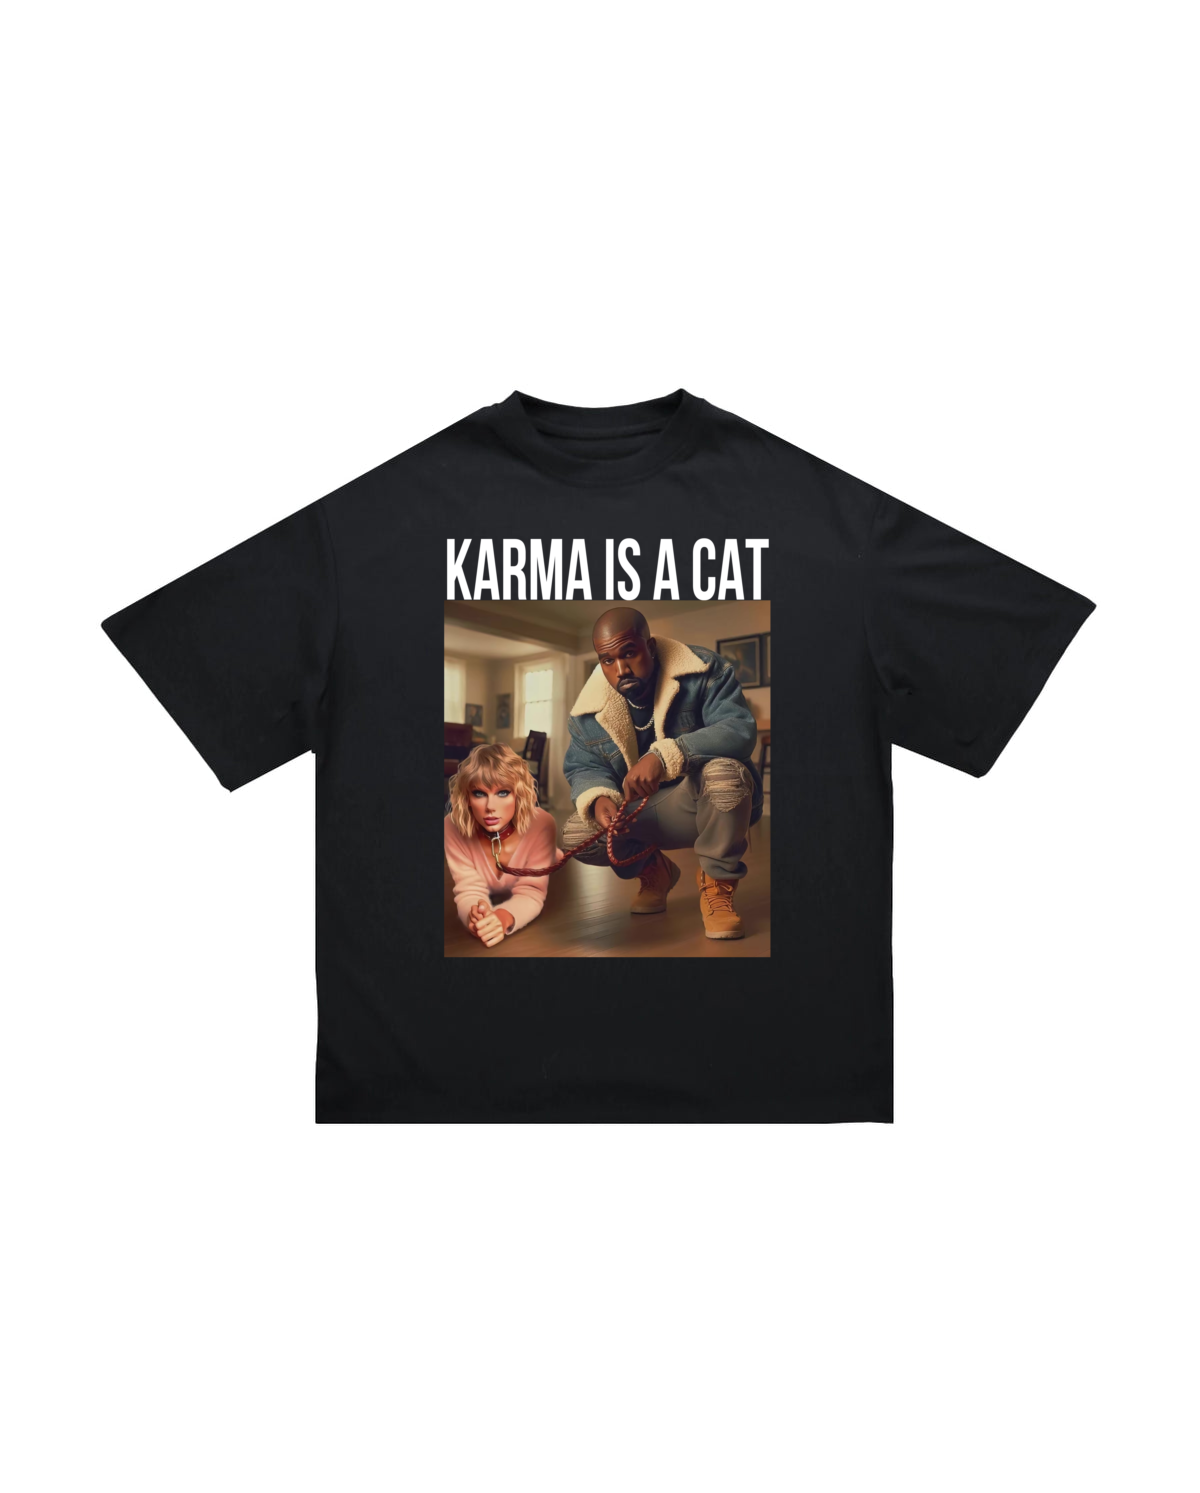 KARMA IS A CAT